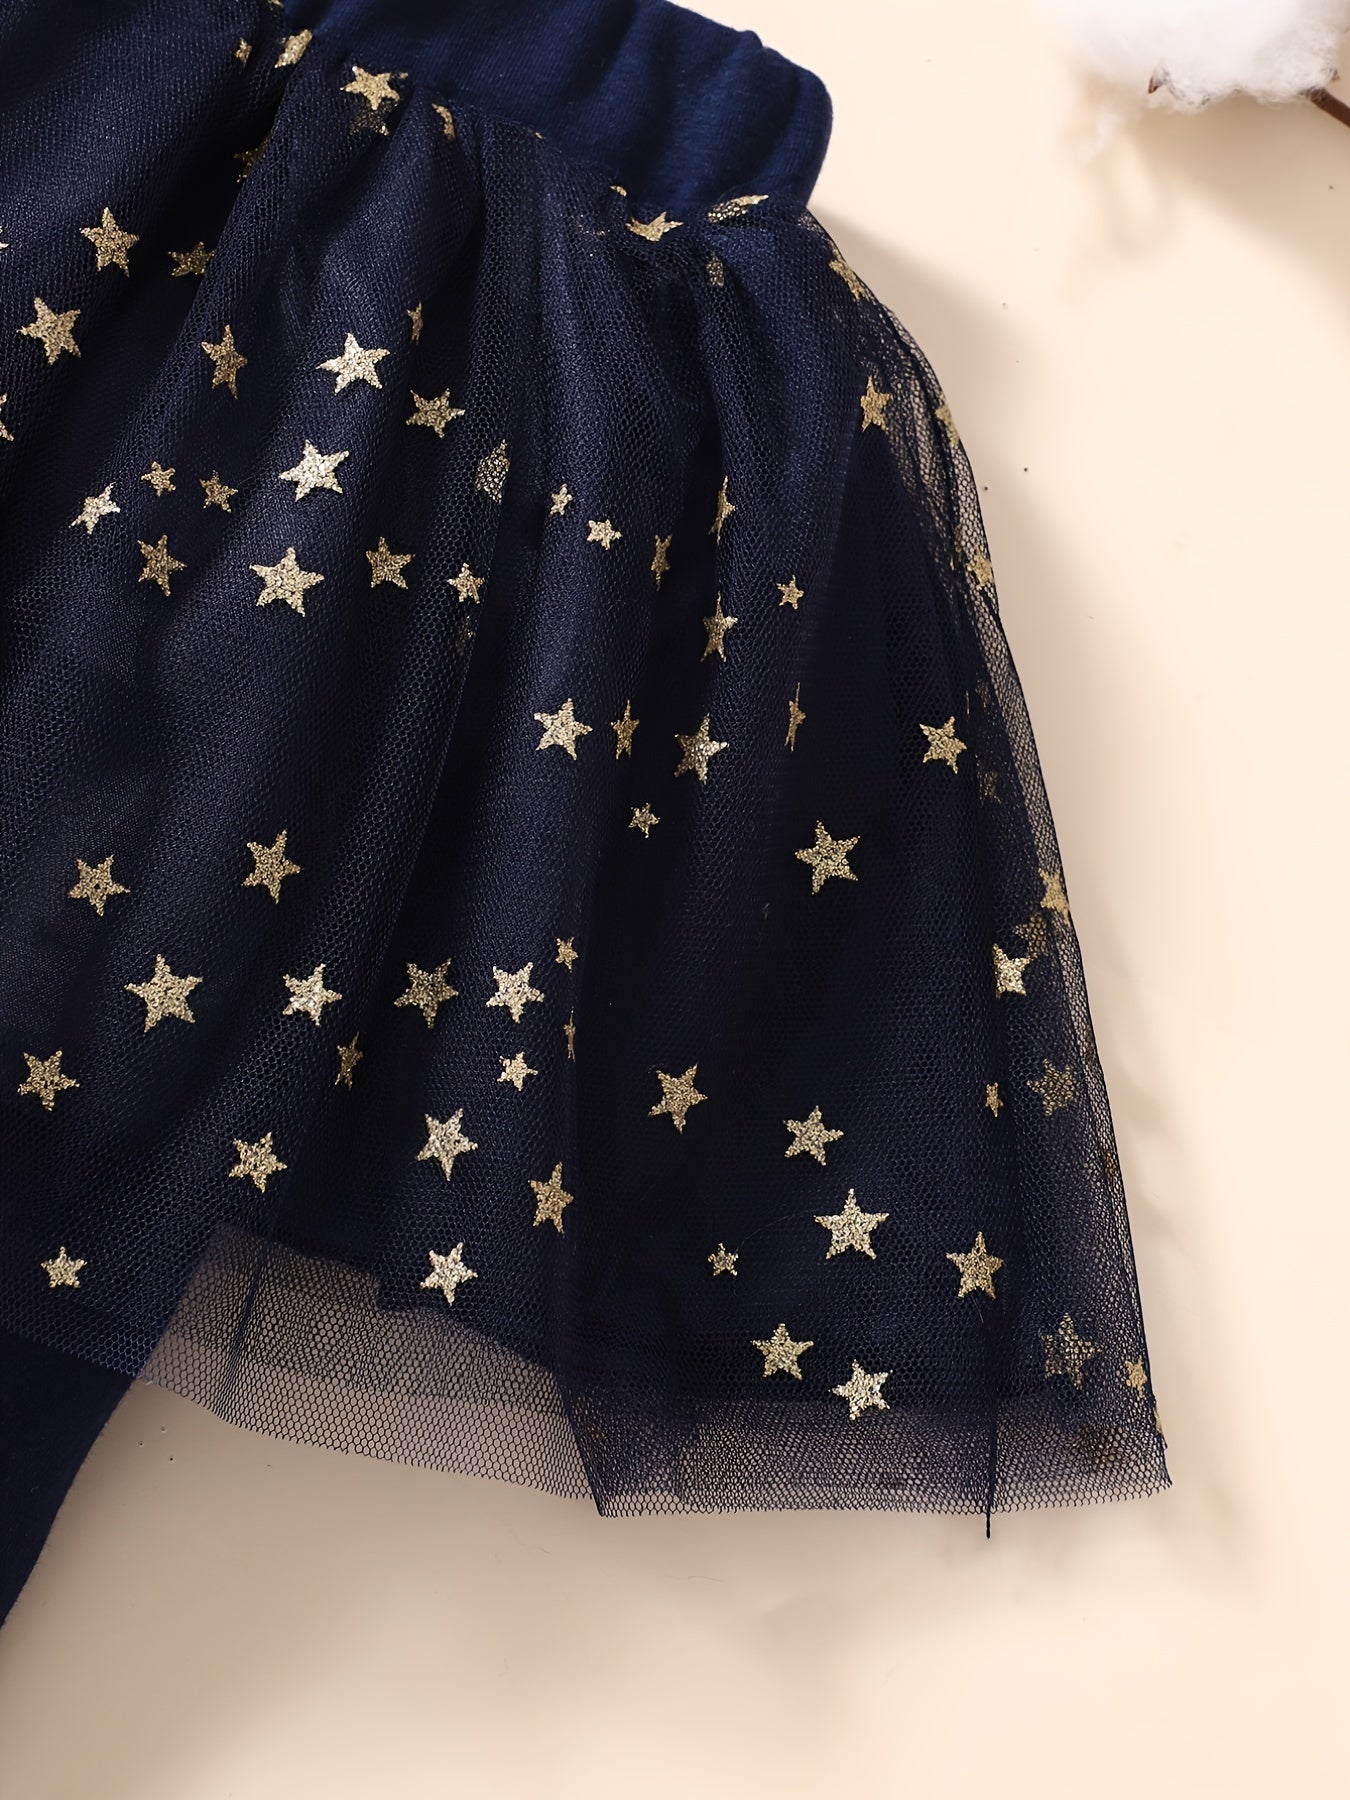 Girls Stitching Star Tutu Skirt Leggings - A Warm and Stylish Winter Outfit